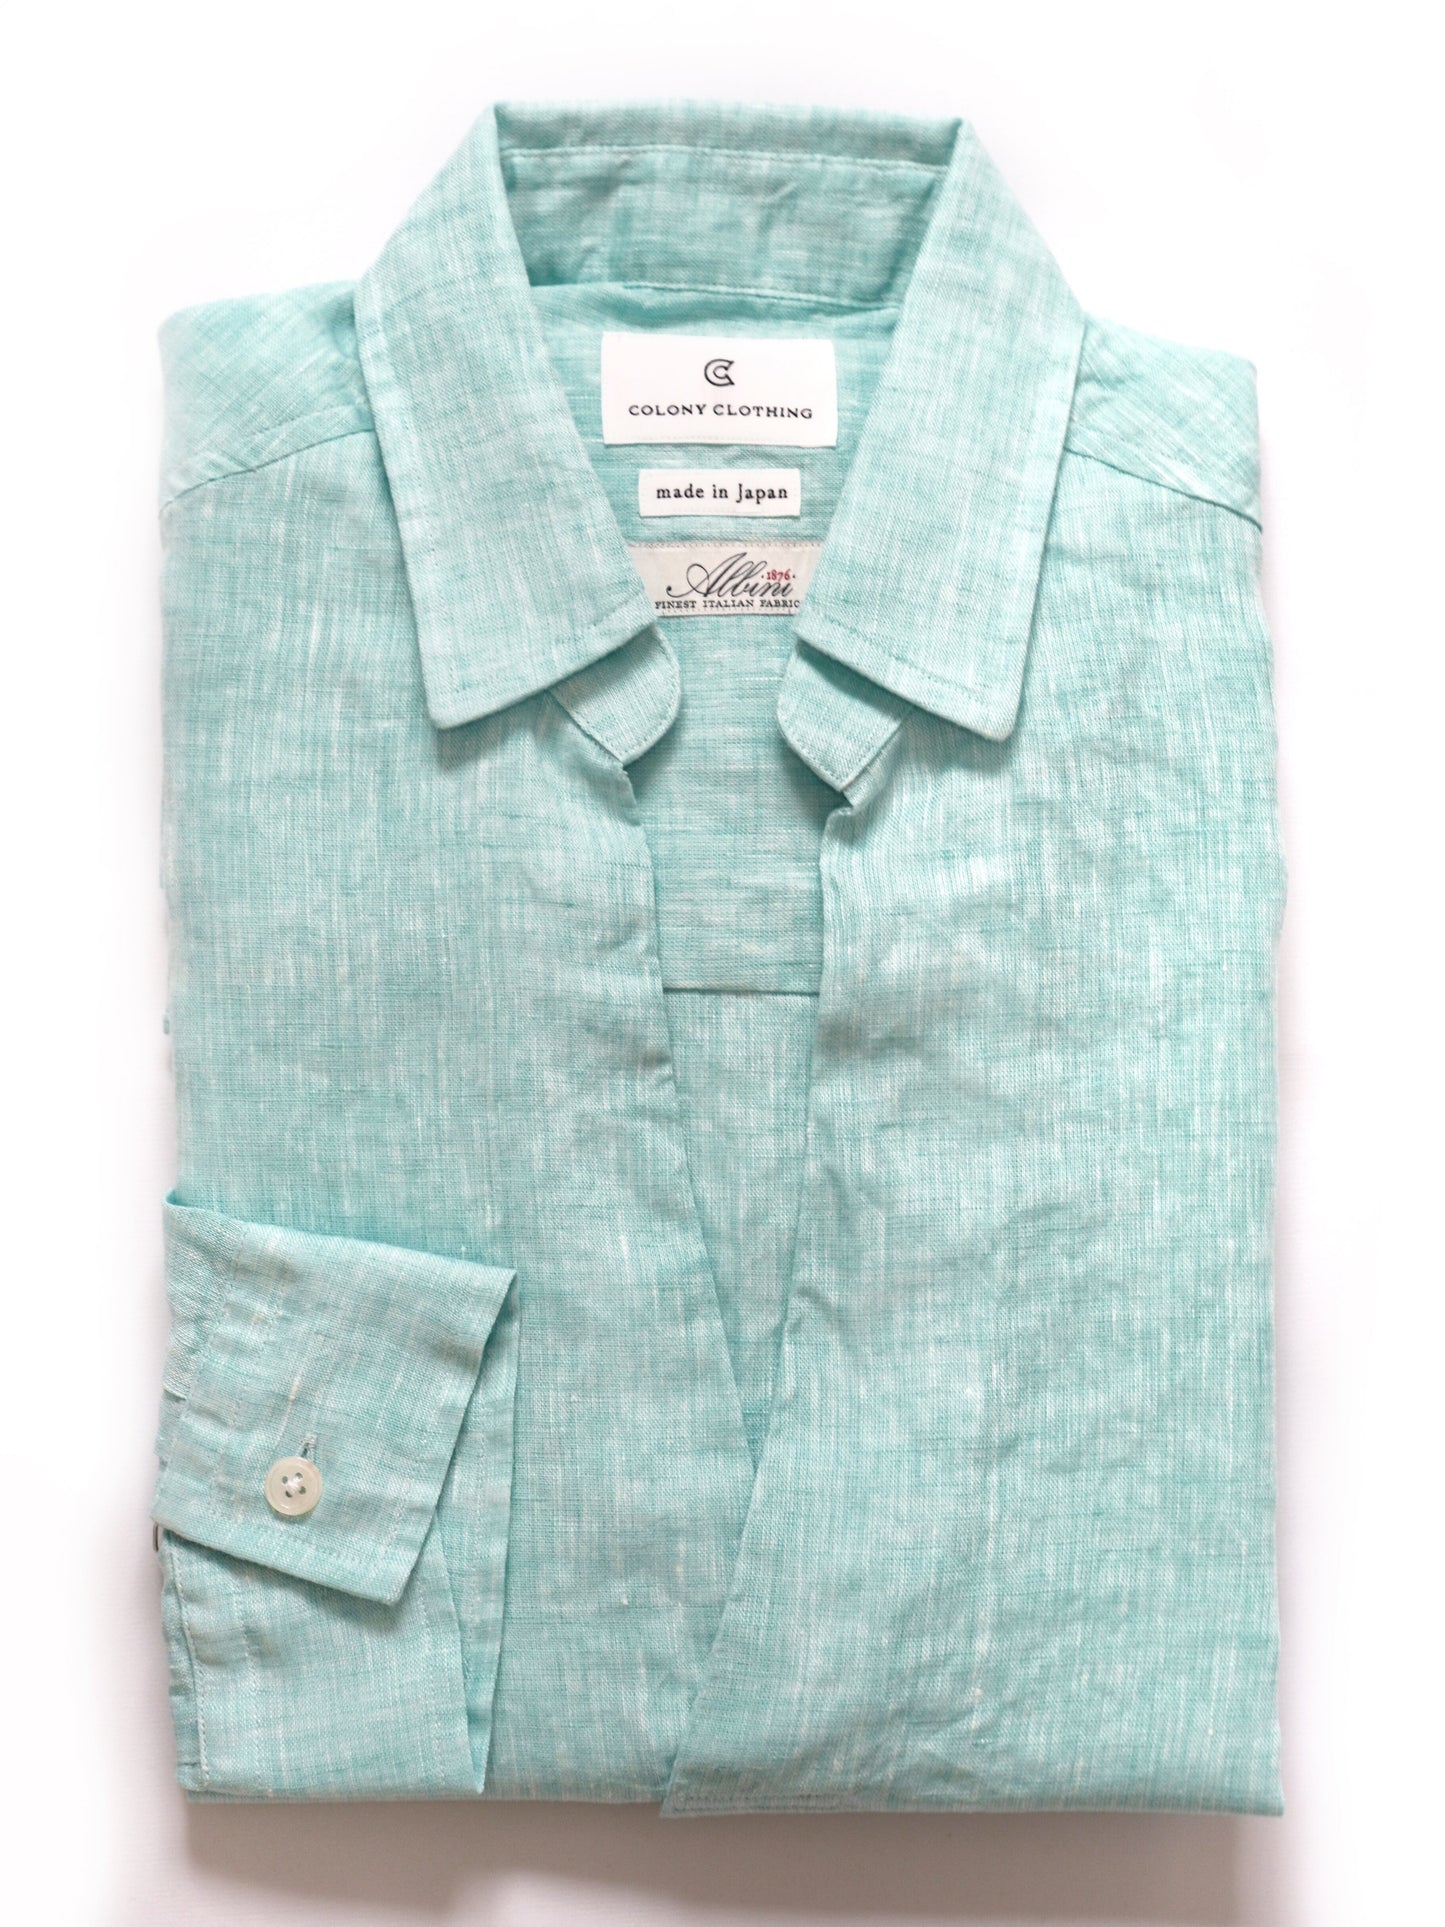 COLONY CLOTHING / Albini リネン プールサイドシャツ / CC20-SH01